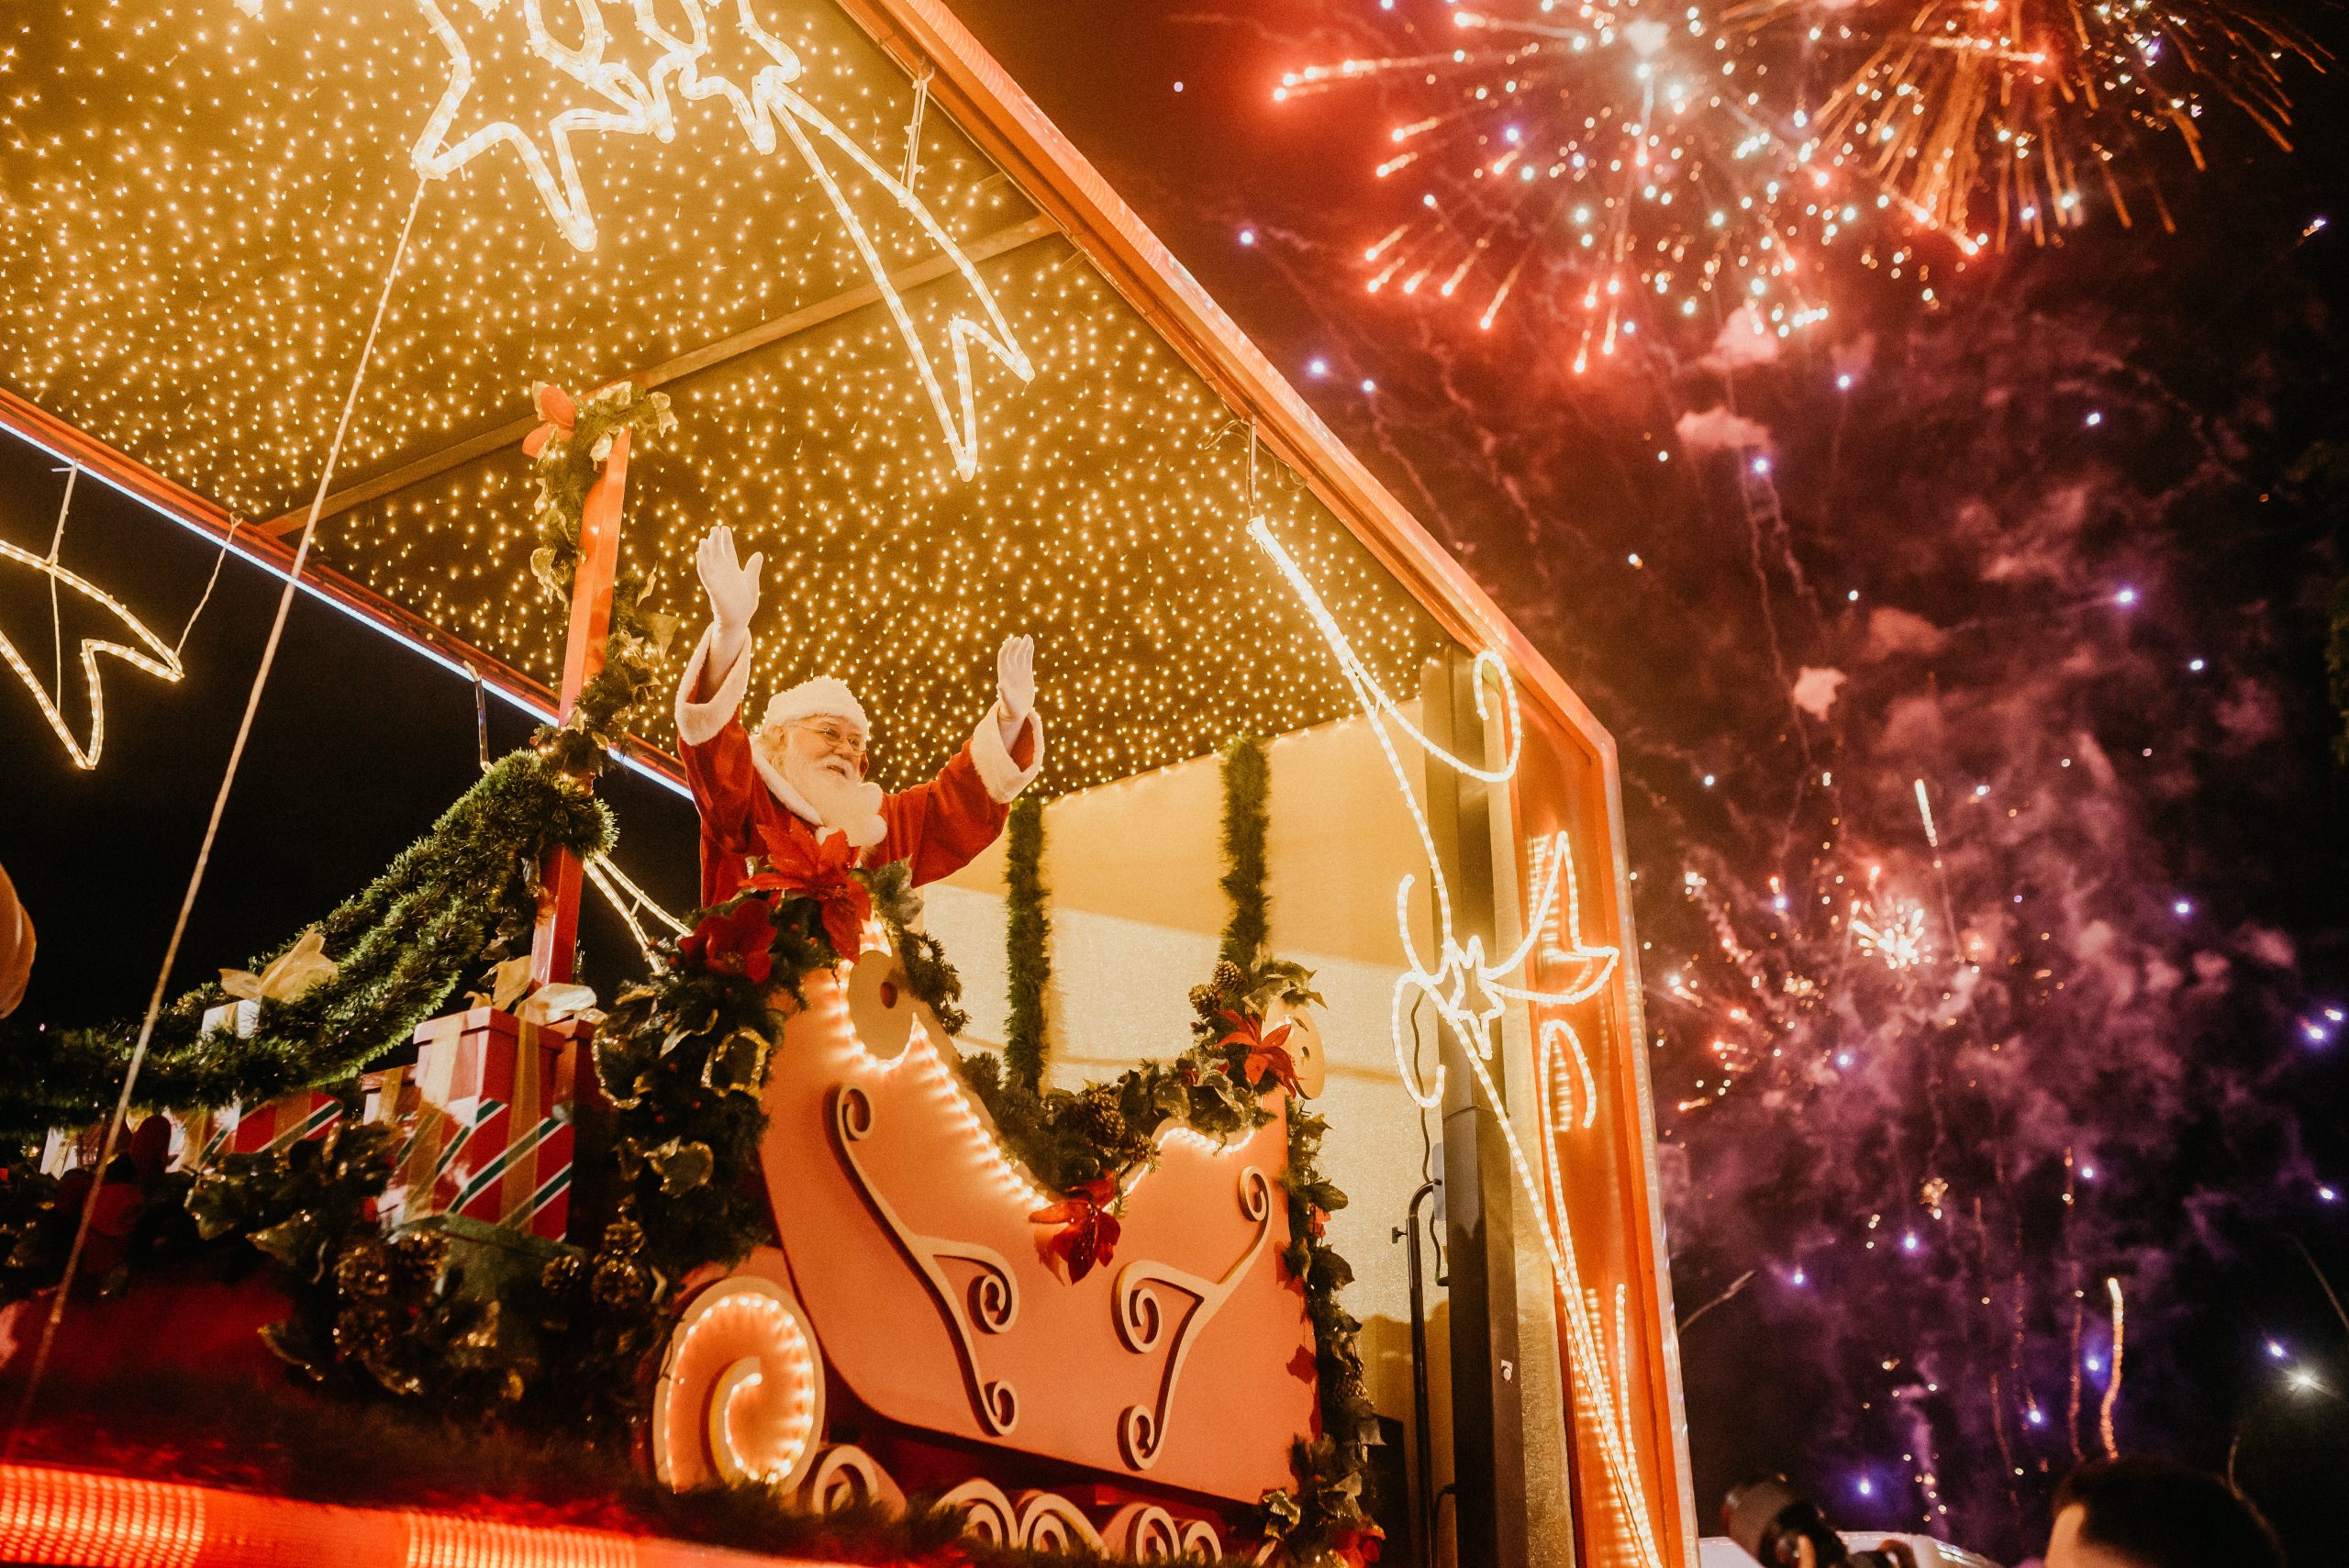 Com voo de helicóptero e caminhão decorado, Papai Noel chega ao Shopping Iguatemi Bosque no dia 5 de novembro